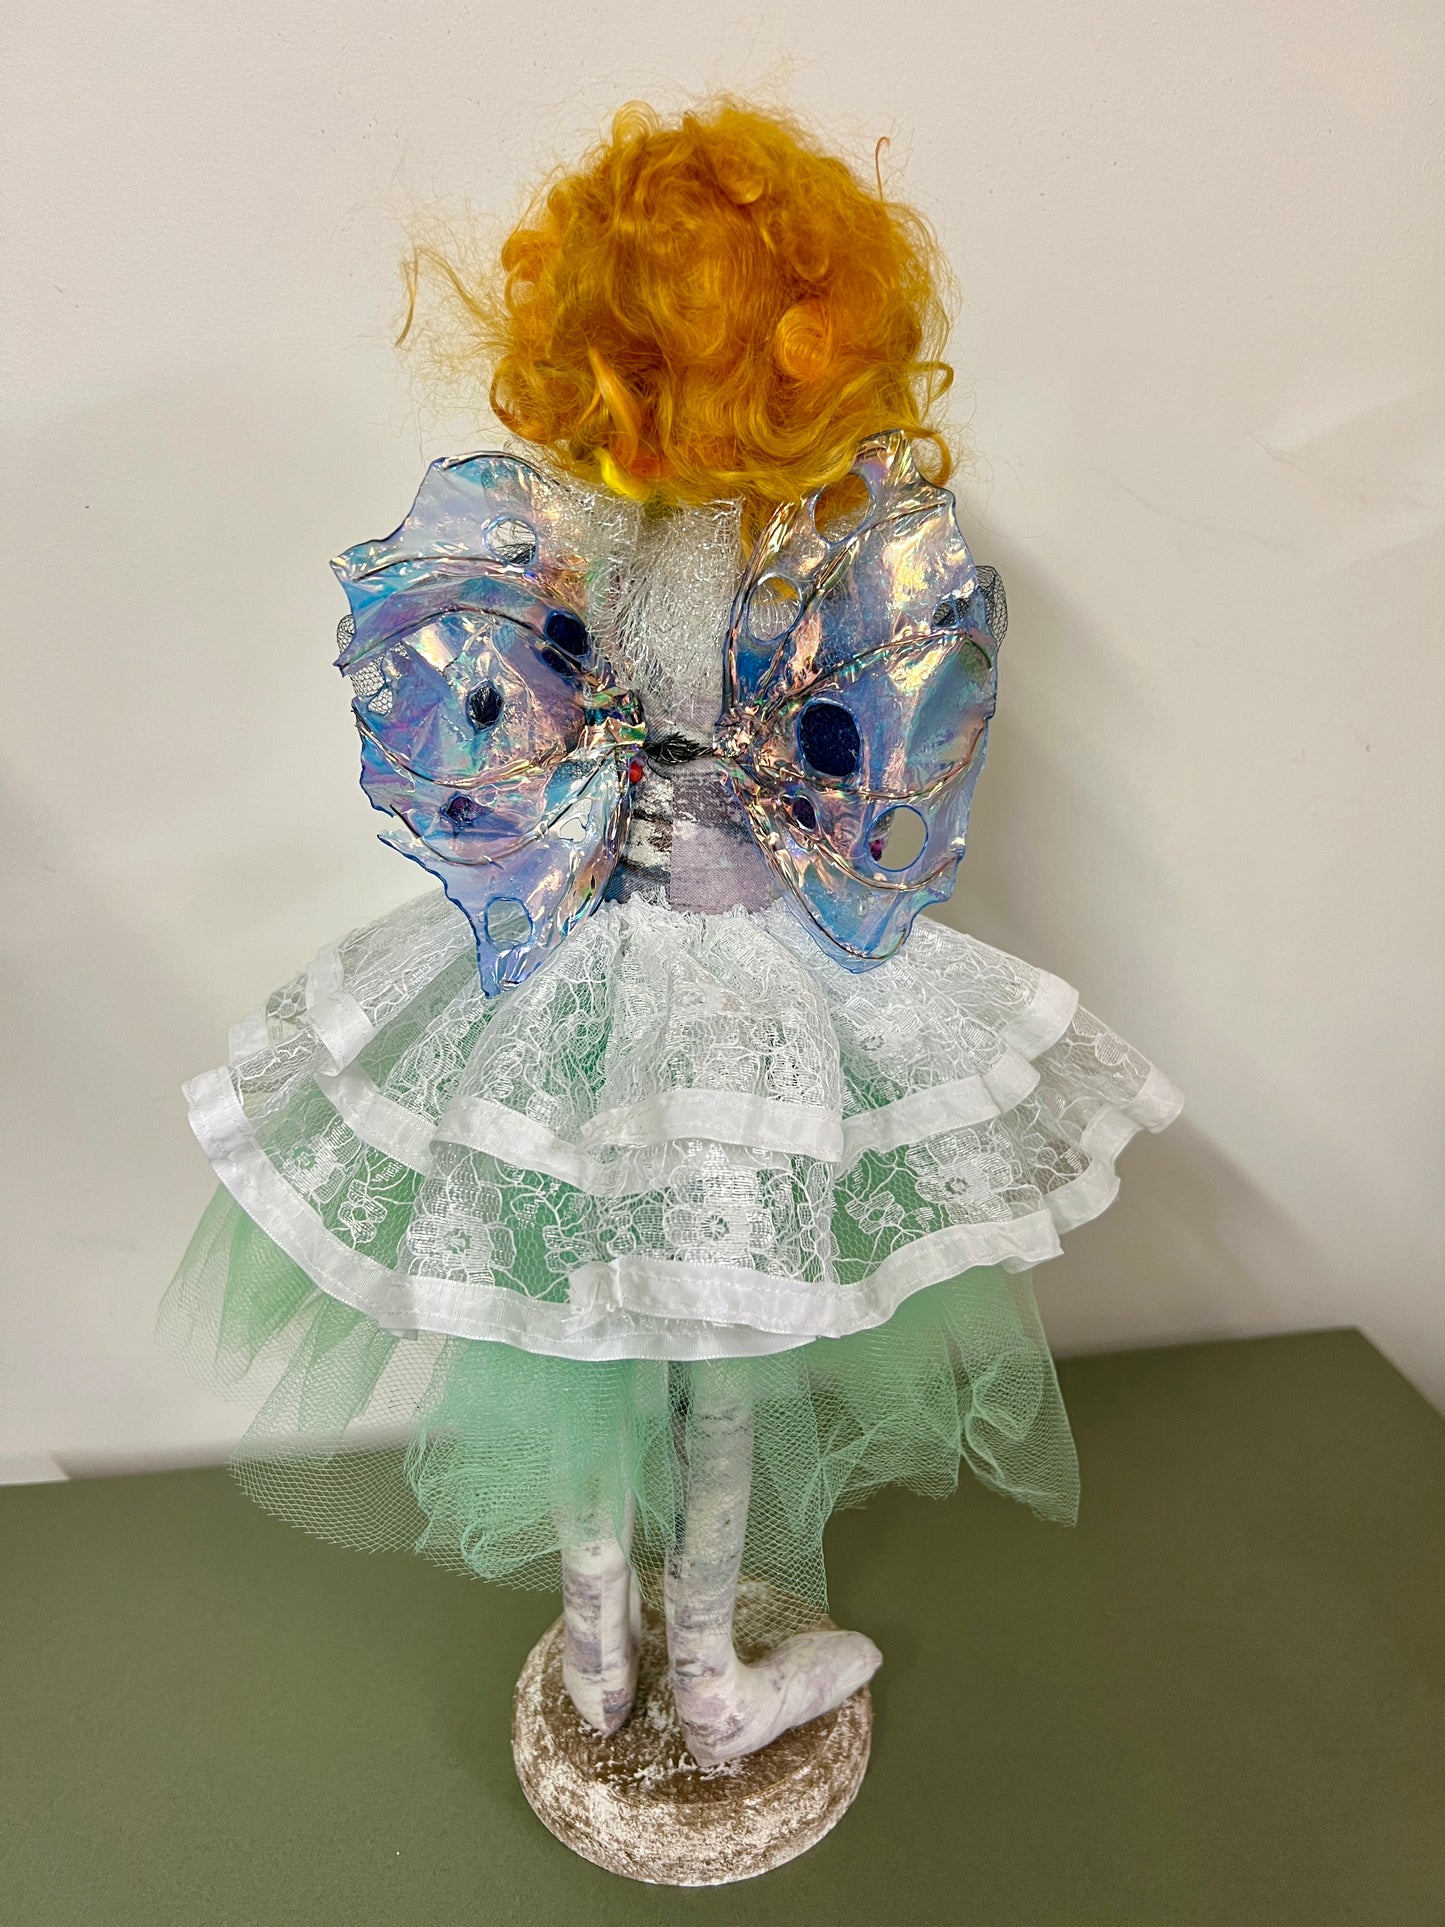 Celeste - a Fairy Doll made by Jan Horrox